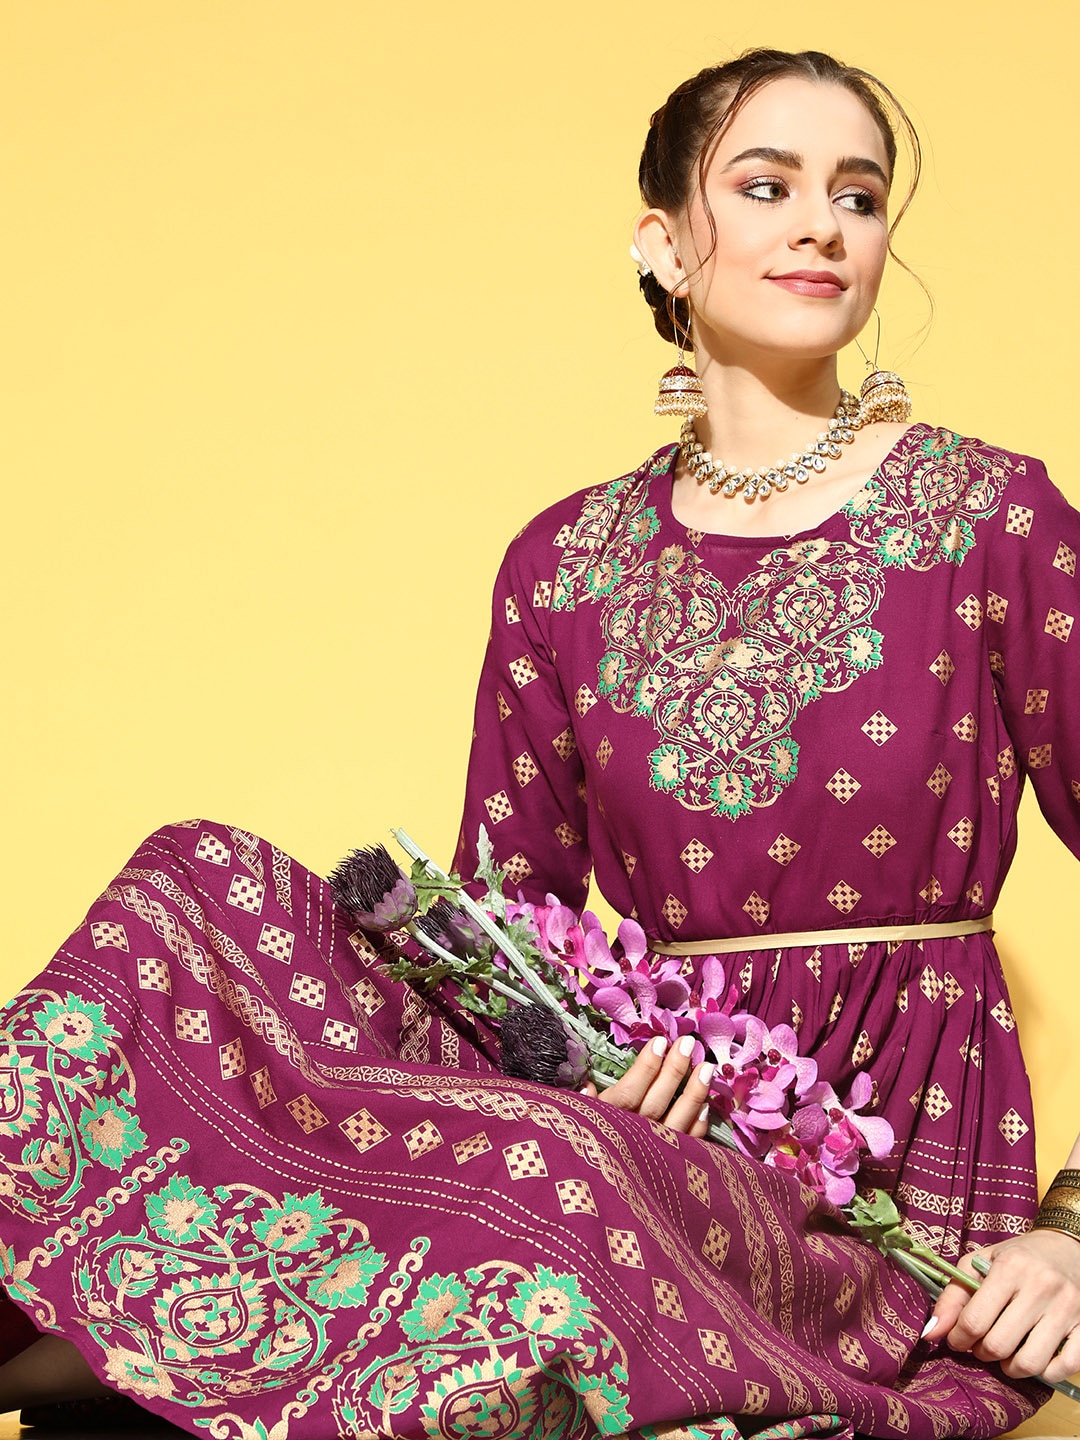 Sangria Women Charming Purple Ethnic Motifs Dress Price in India